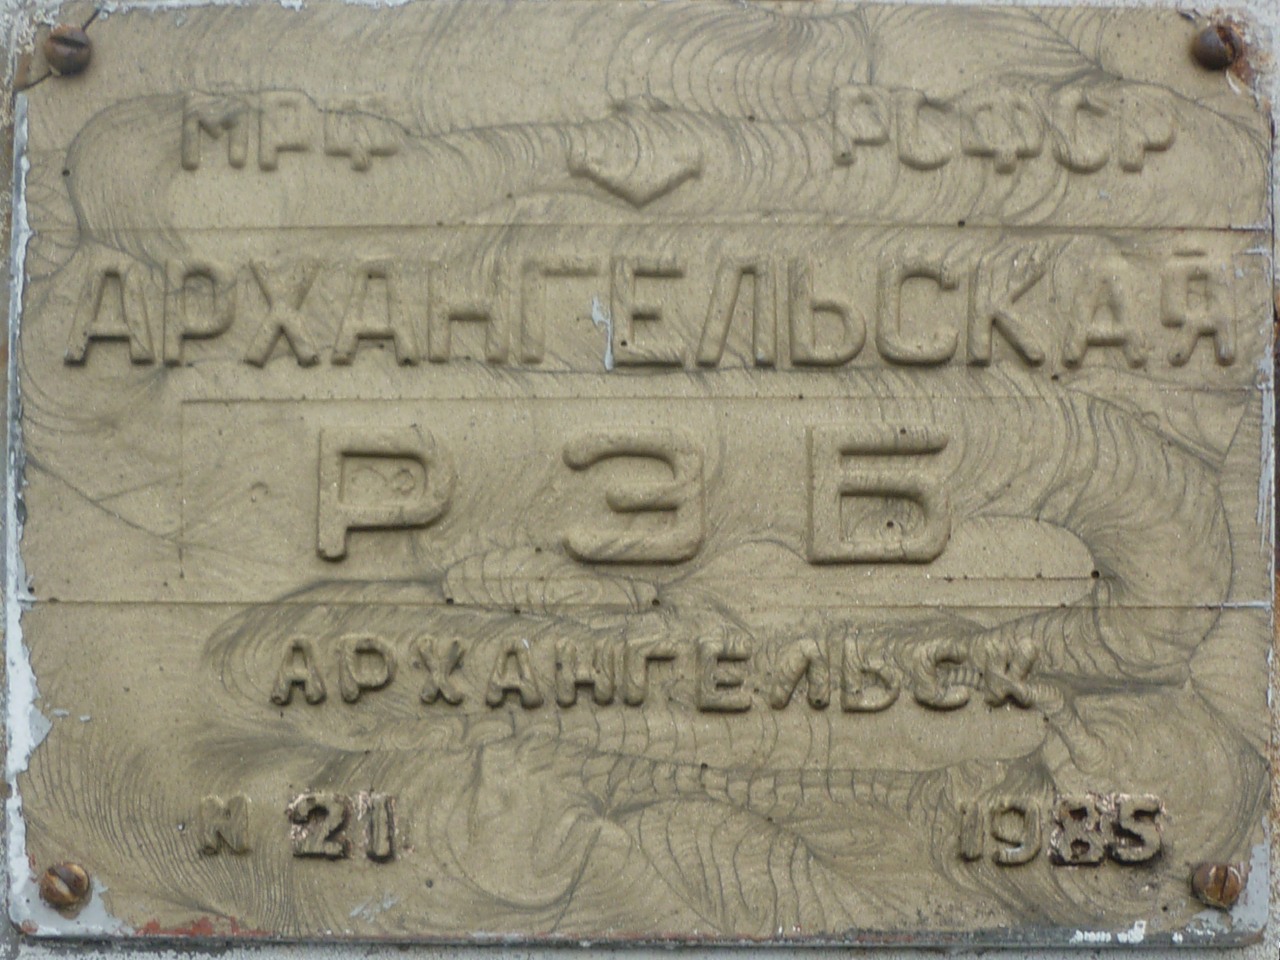 Плавдок-21. Shipbuilder's Makers Plates